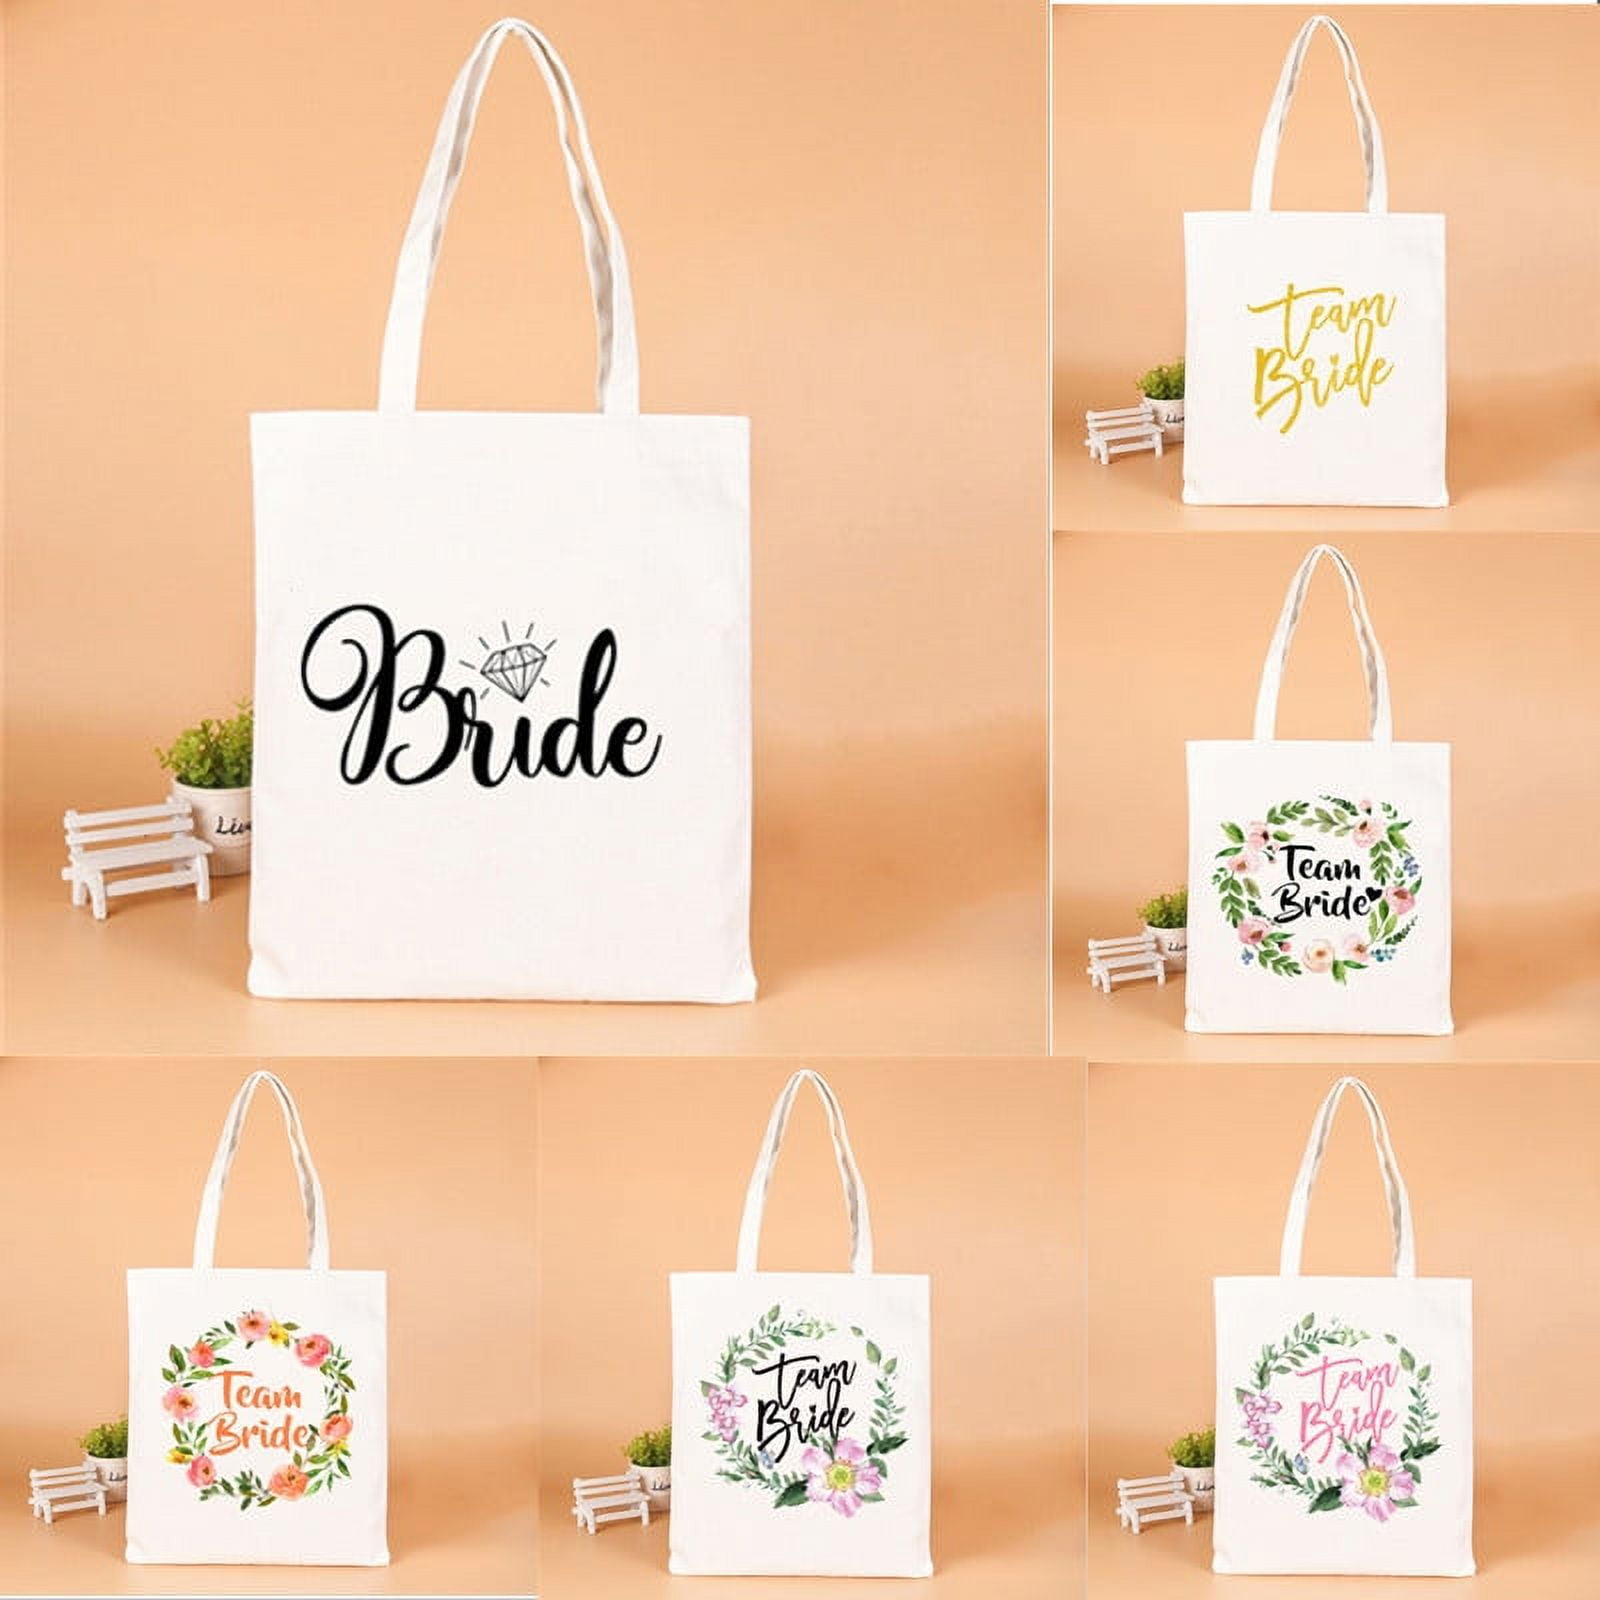 Visland Team Bride Cotton Linen Tote Bag Bridesmaid Gift Bags